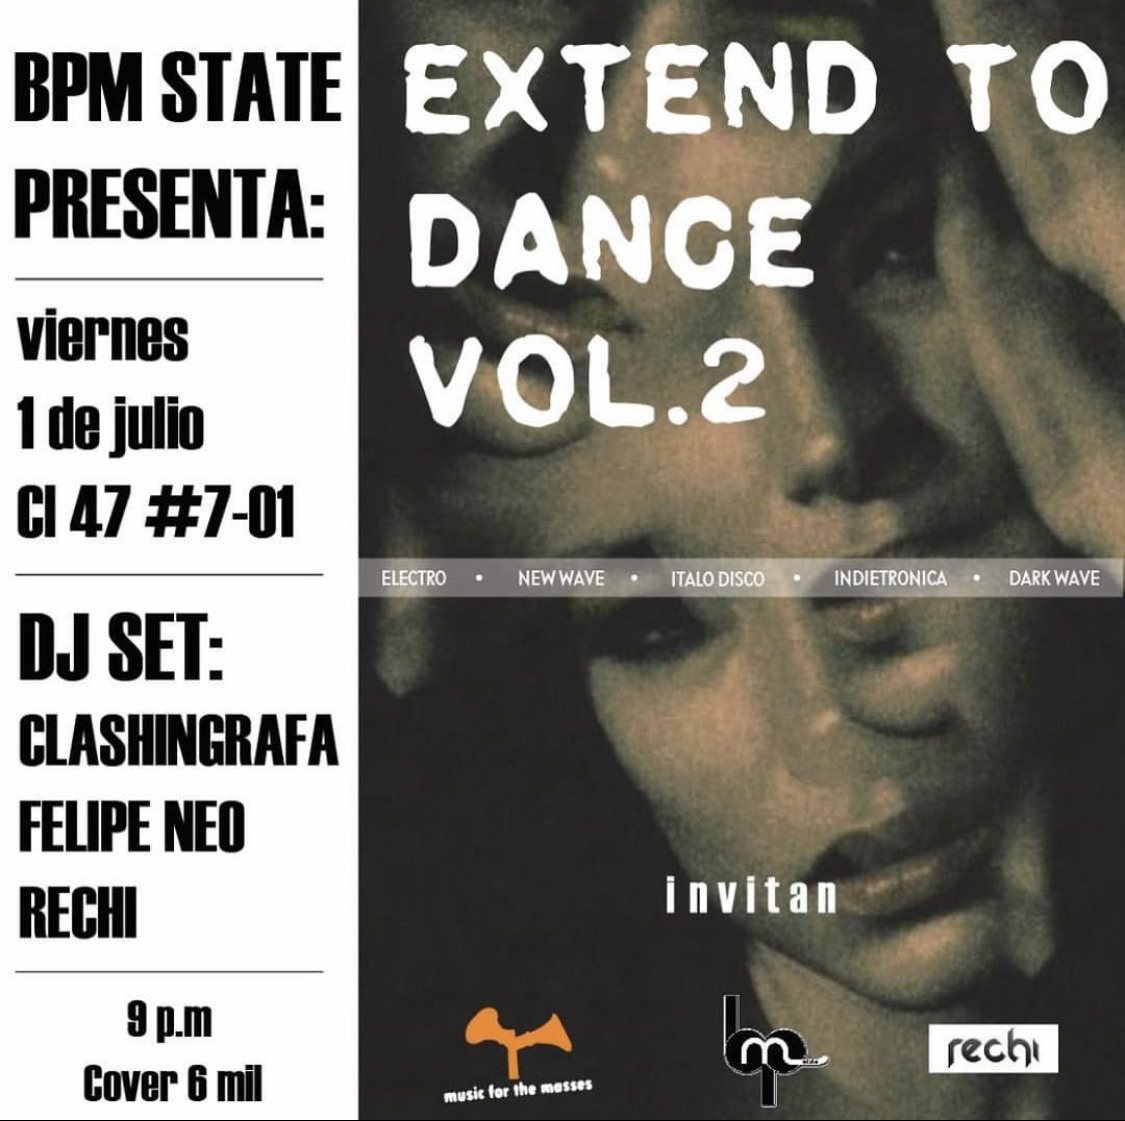 1 Jul 22 - Extend to dance Vol 2  (Neo-Clashingrafa & Rechi)